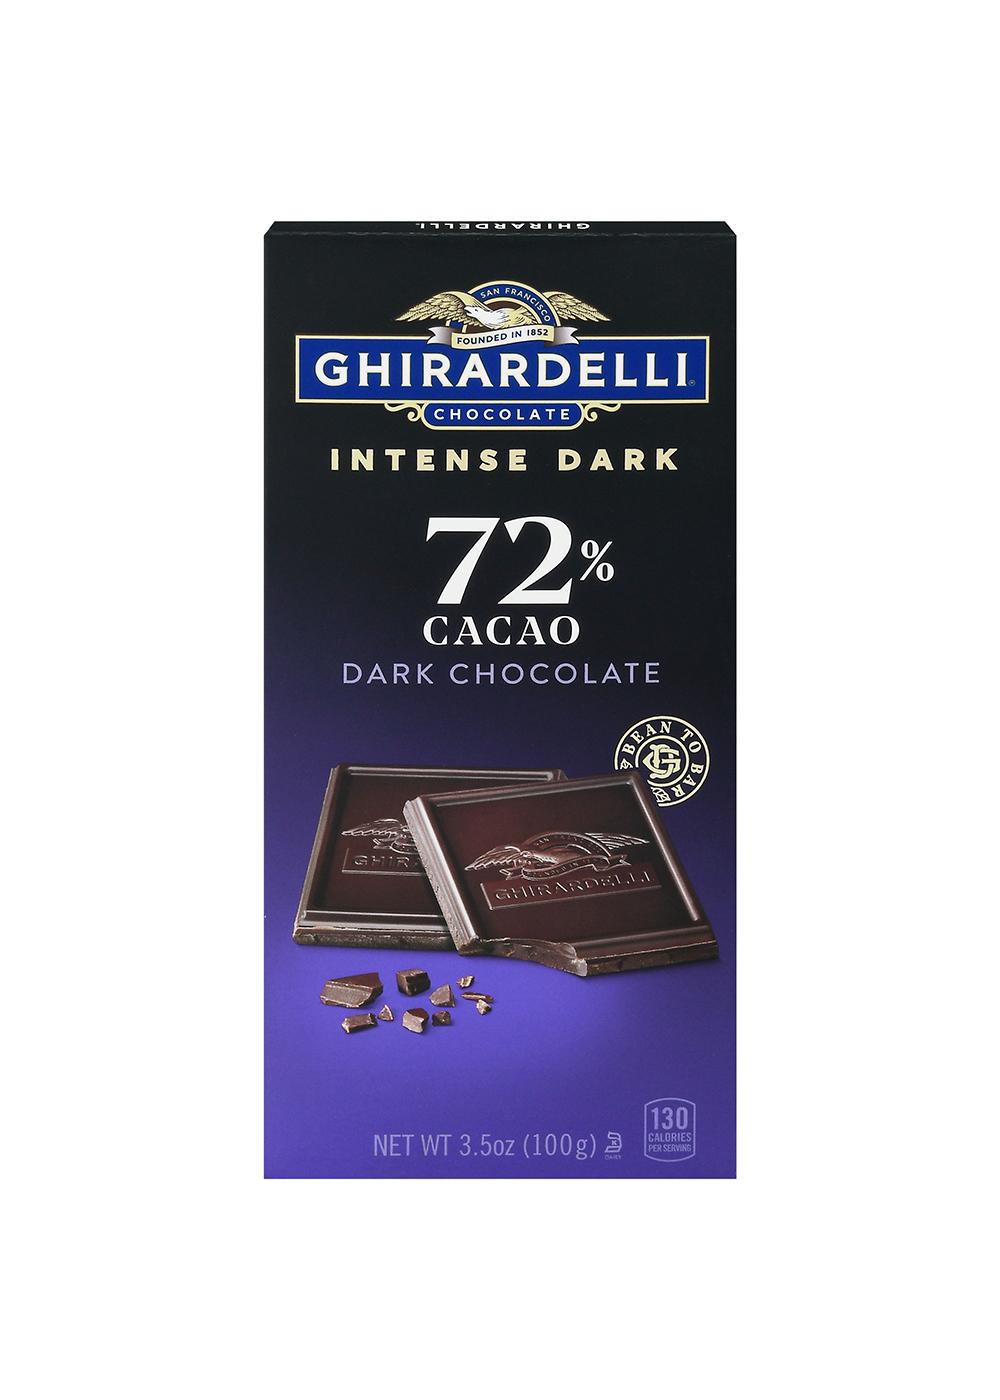 Ghirardelli Intense Dark 72% Cacao Chocolate Bar; image 1 of 5